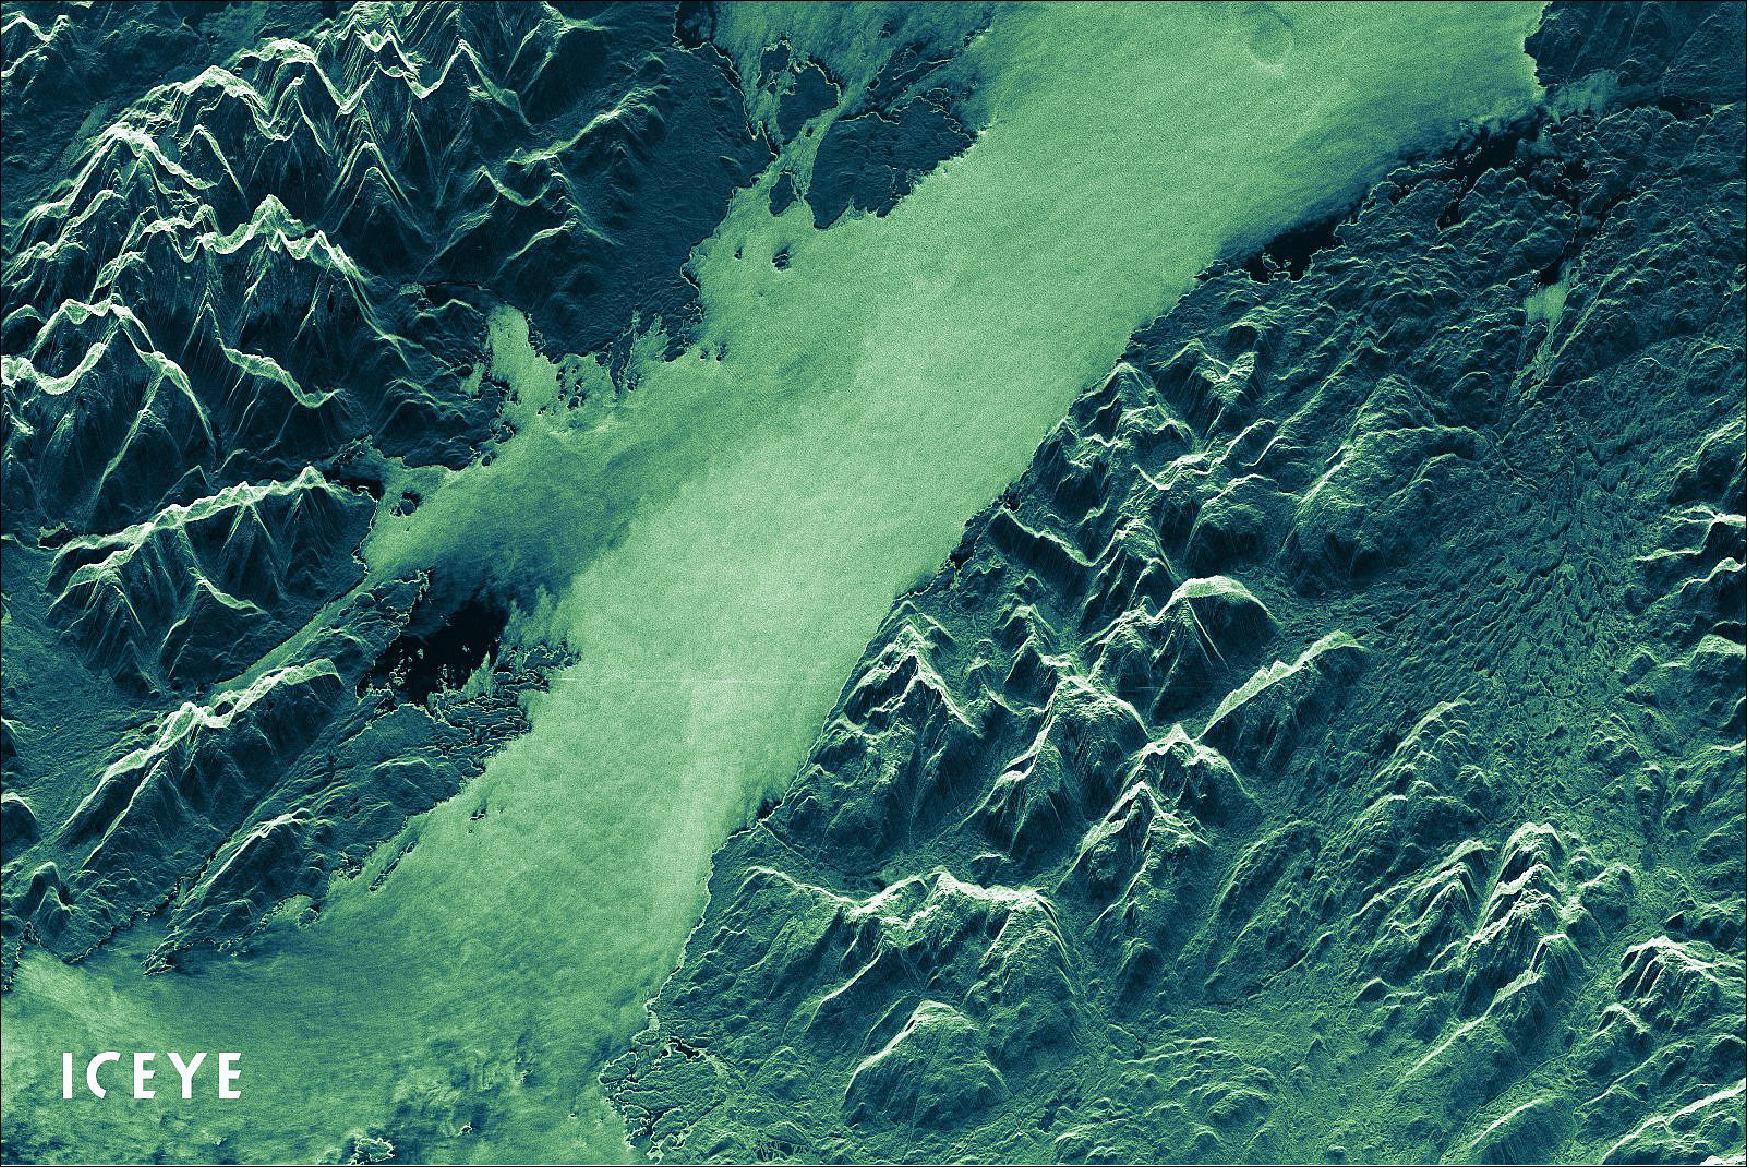 Figure 34: ICEYE SAR image of an Alaska scene (image credit: ICEYE)